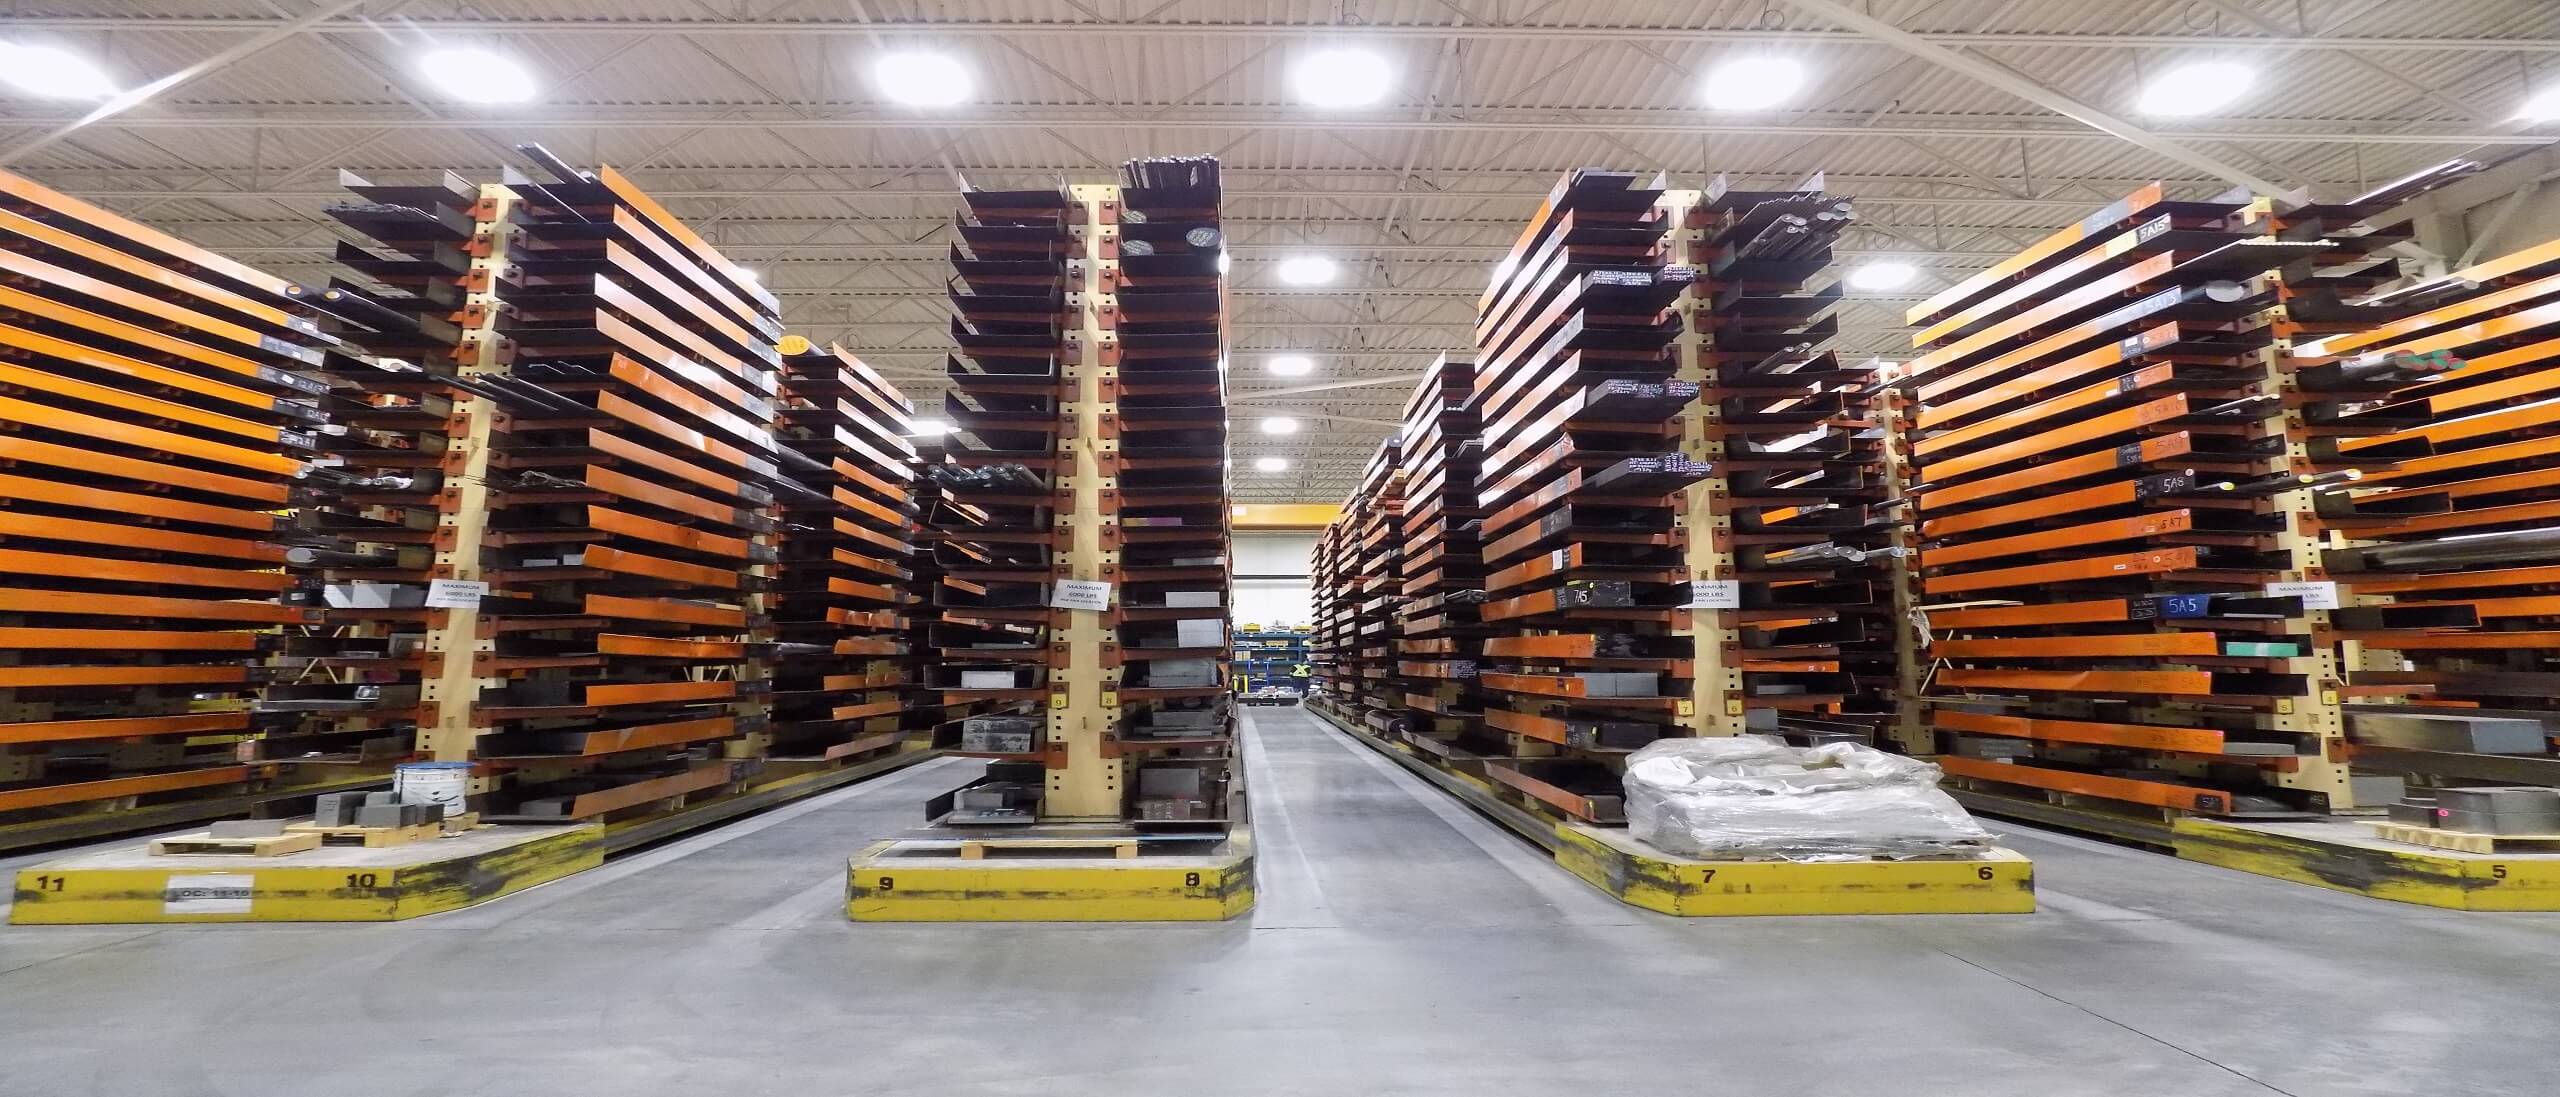 Warehouse with racks, steel bars in pans on shelves